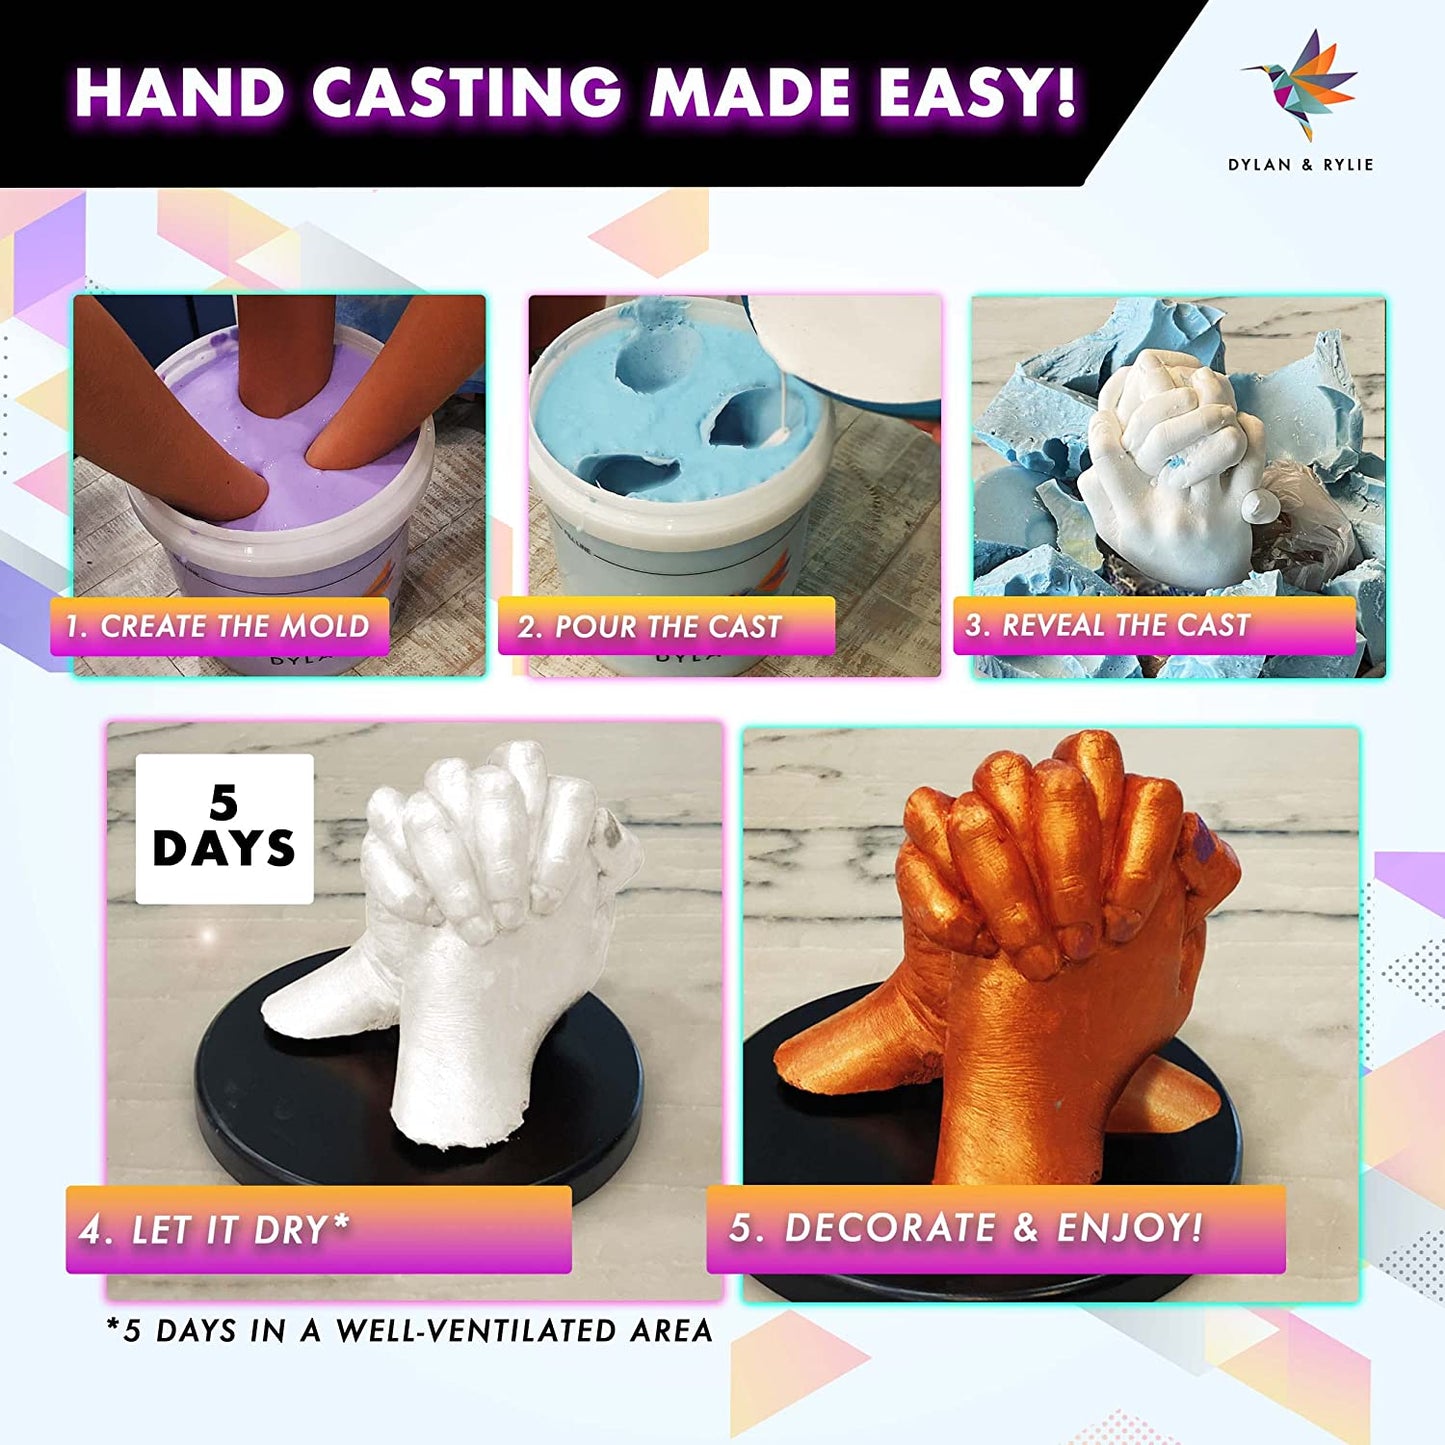 Fake 'N Bake Blog: Hand Casting Part 1